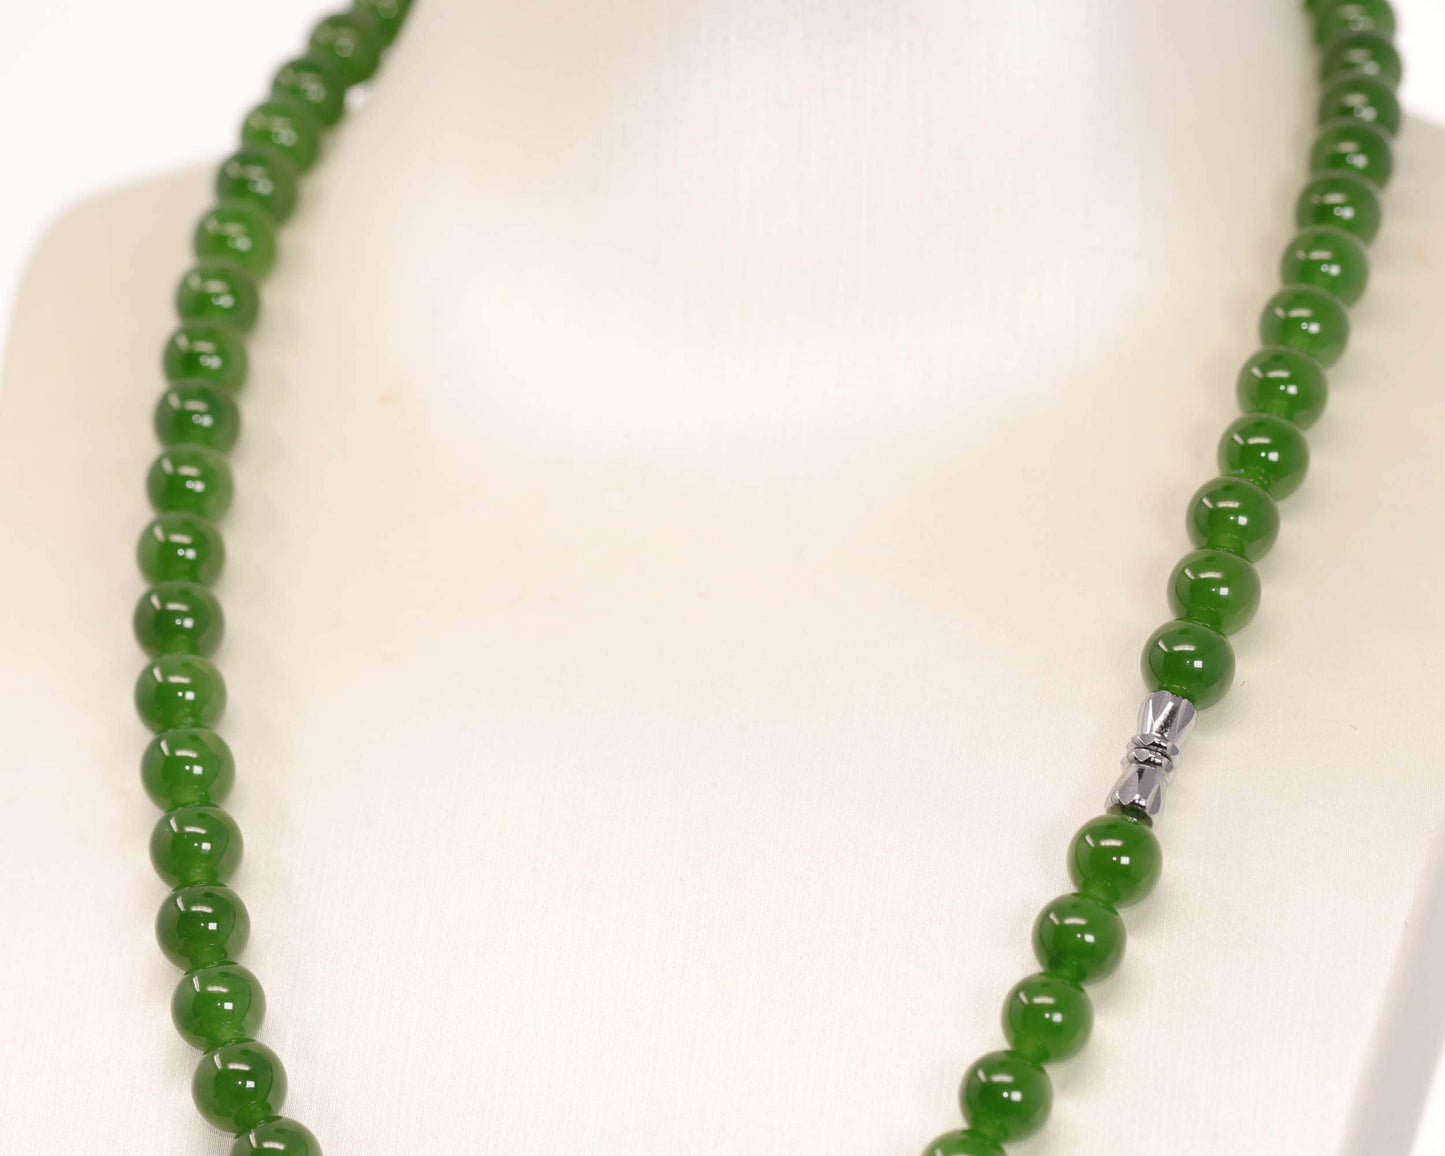 RealJade® Genuine High-quality Apple Green Nephrite Jade Round Beads Necklace ( 6mm )